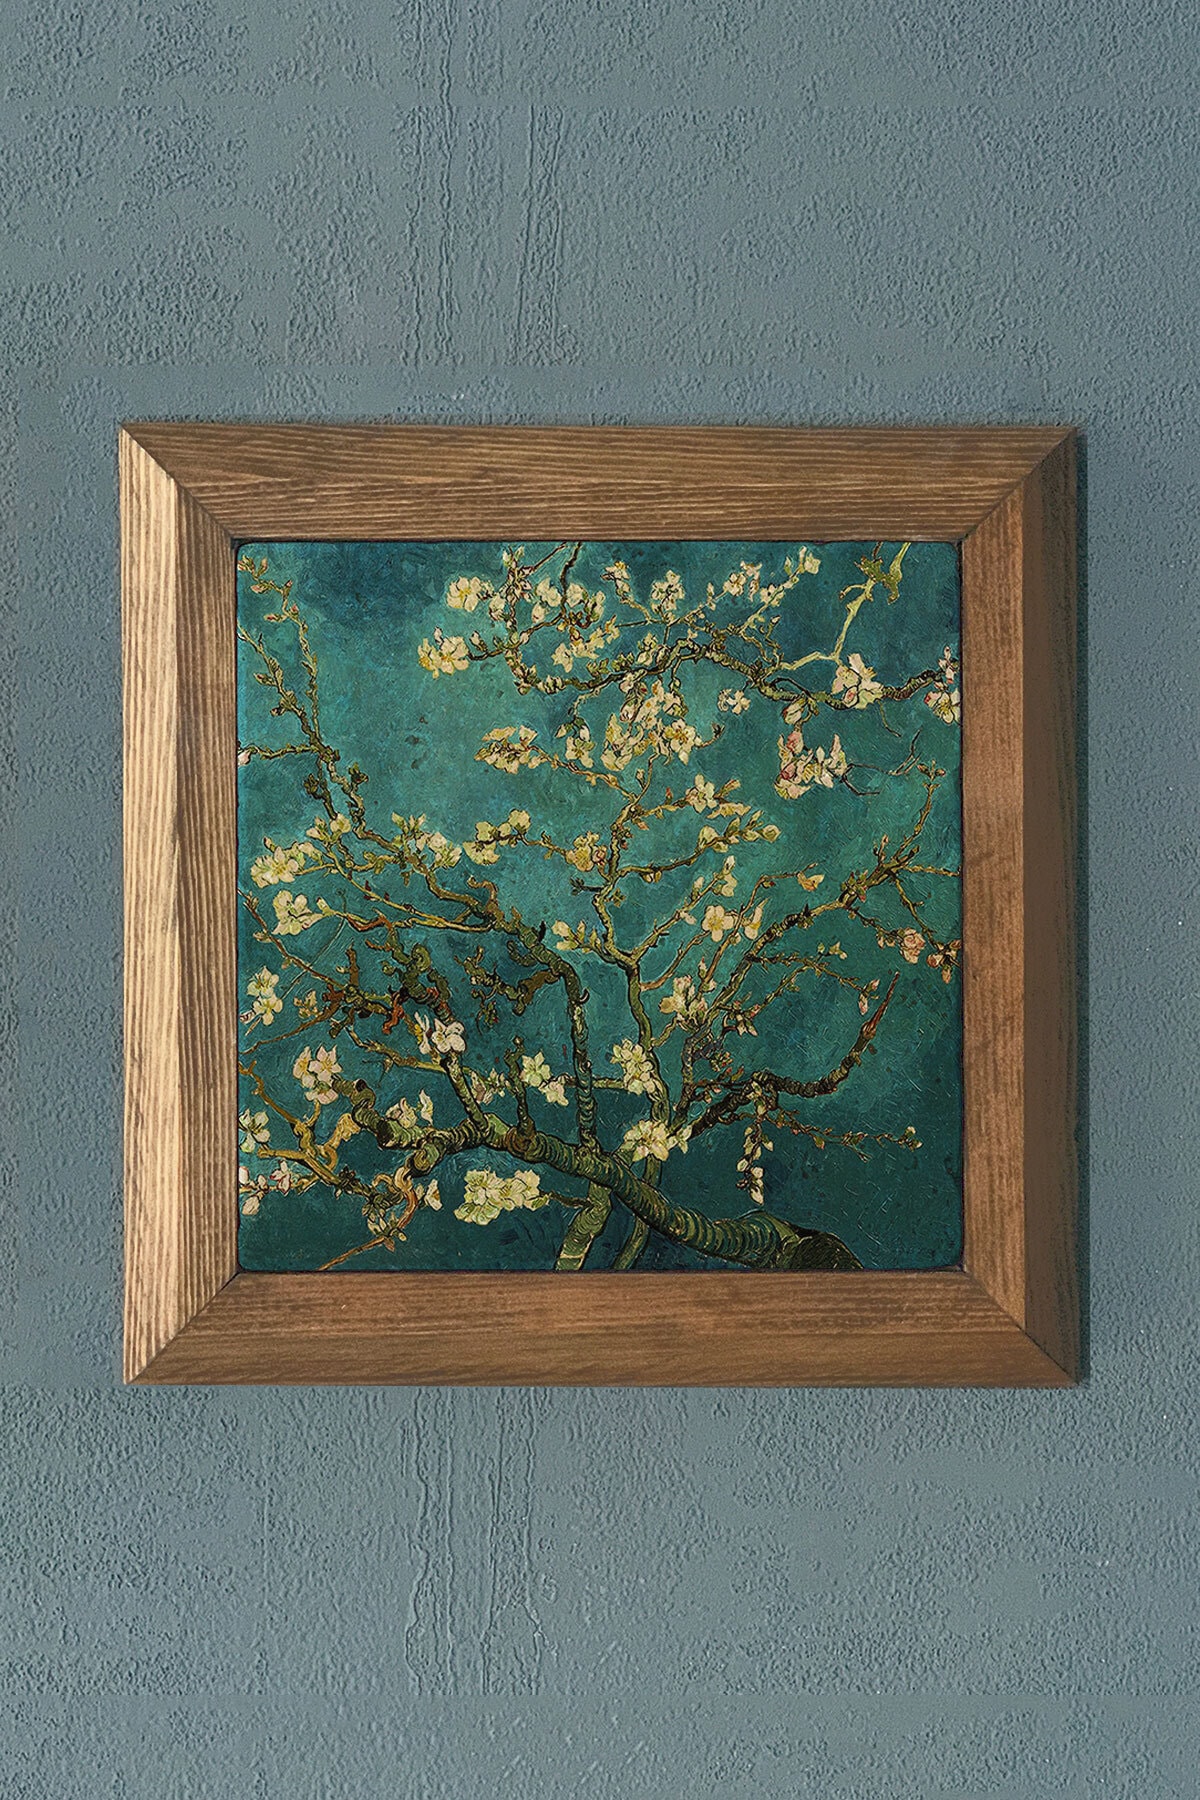 Oscar Stone Decor Vincent Van Gogh’un “almond Blossoms” Eserii-taş Tablo- 28x28 Cm